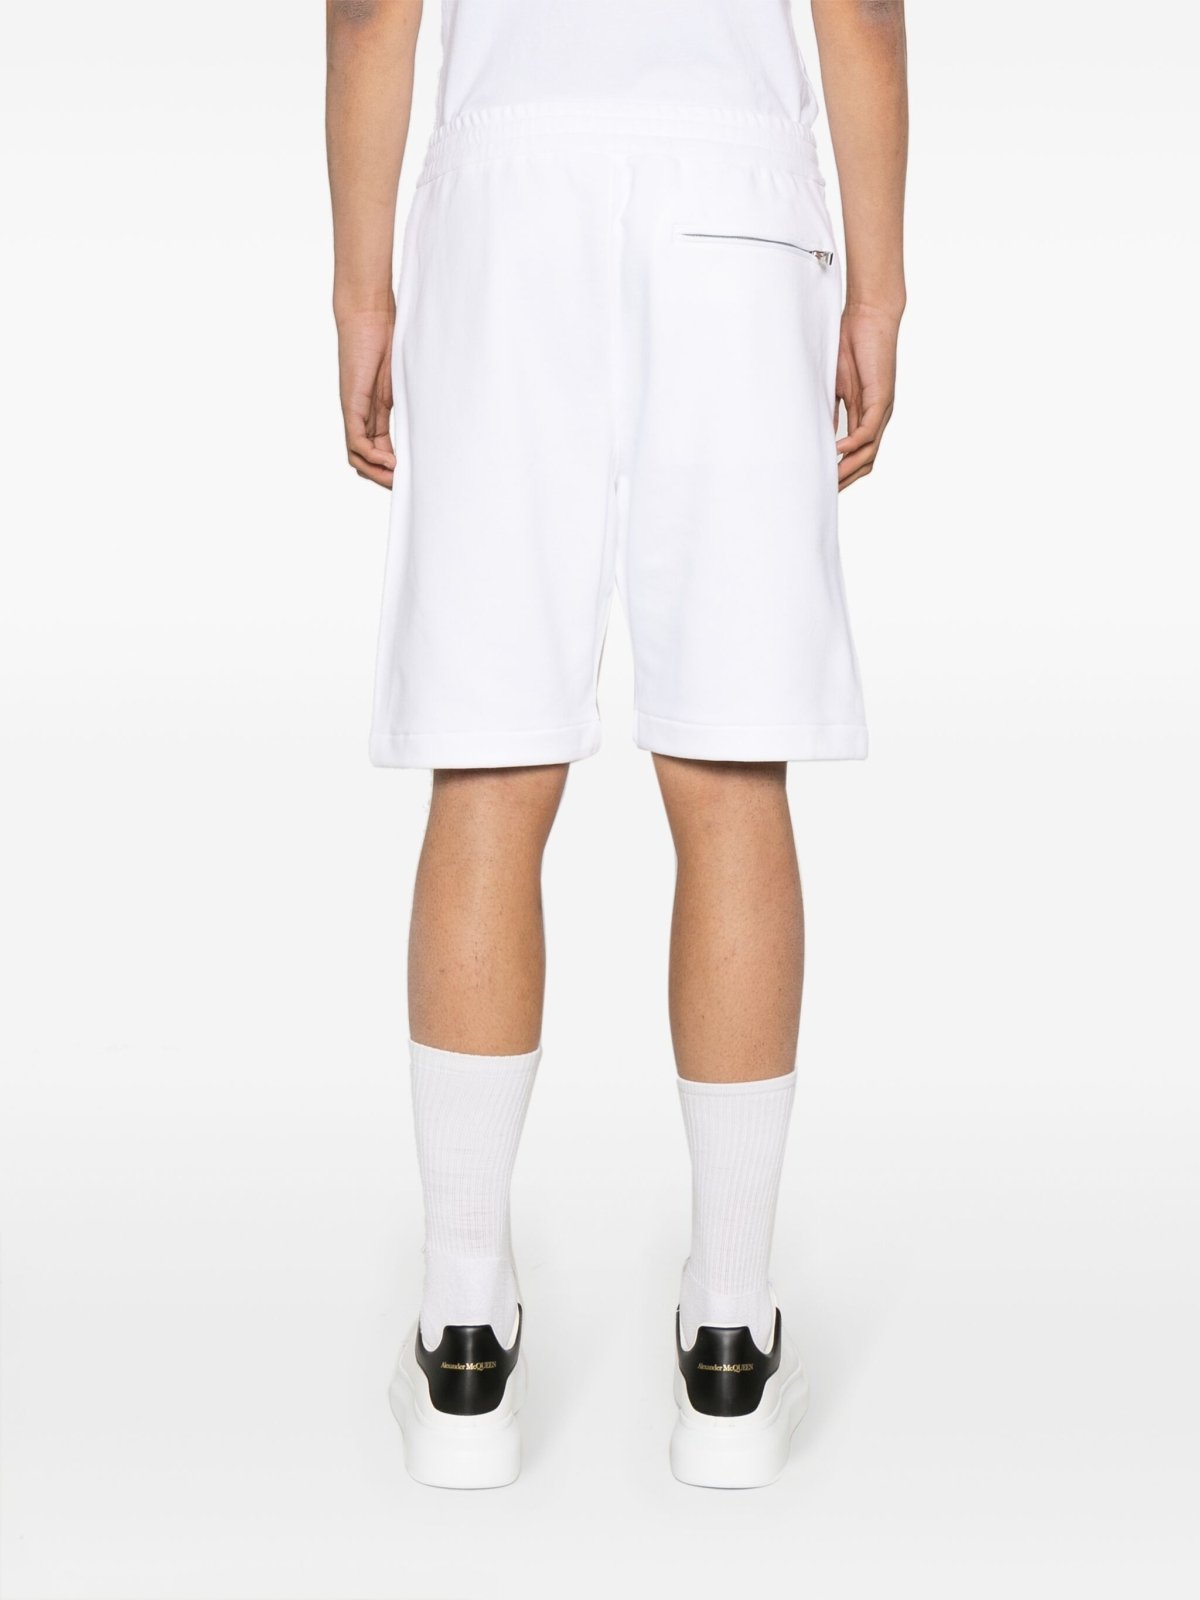 Alexander McQueenGraffiti Logo Print White Shorts at Fashion Clinic